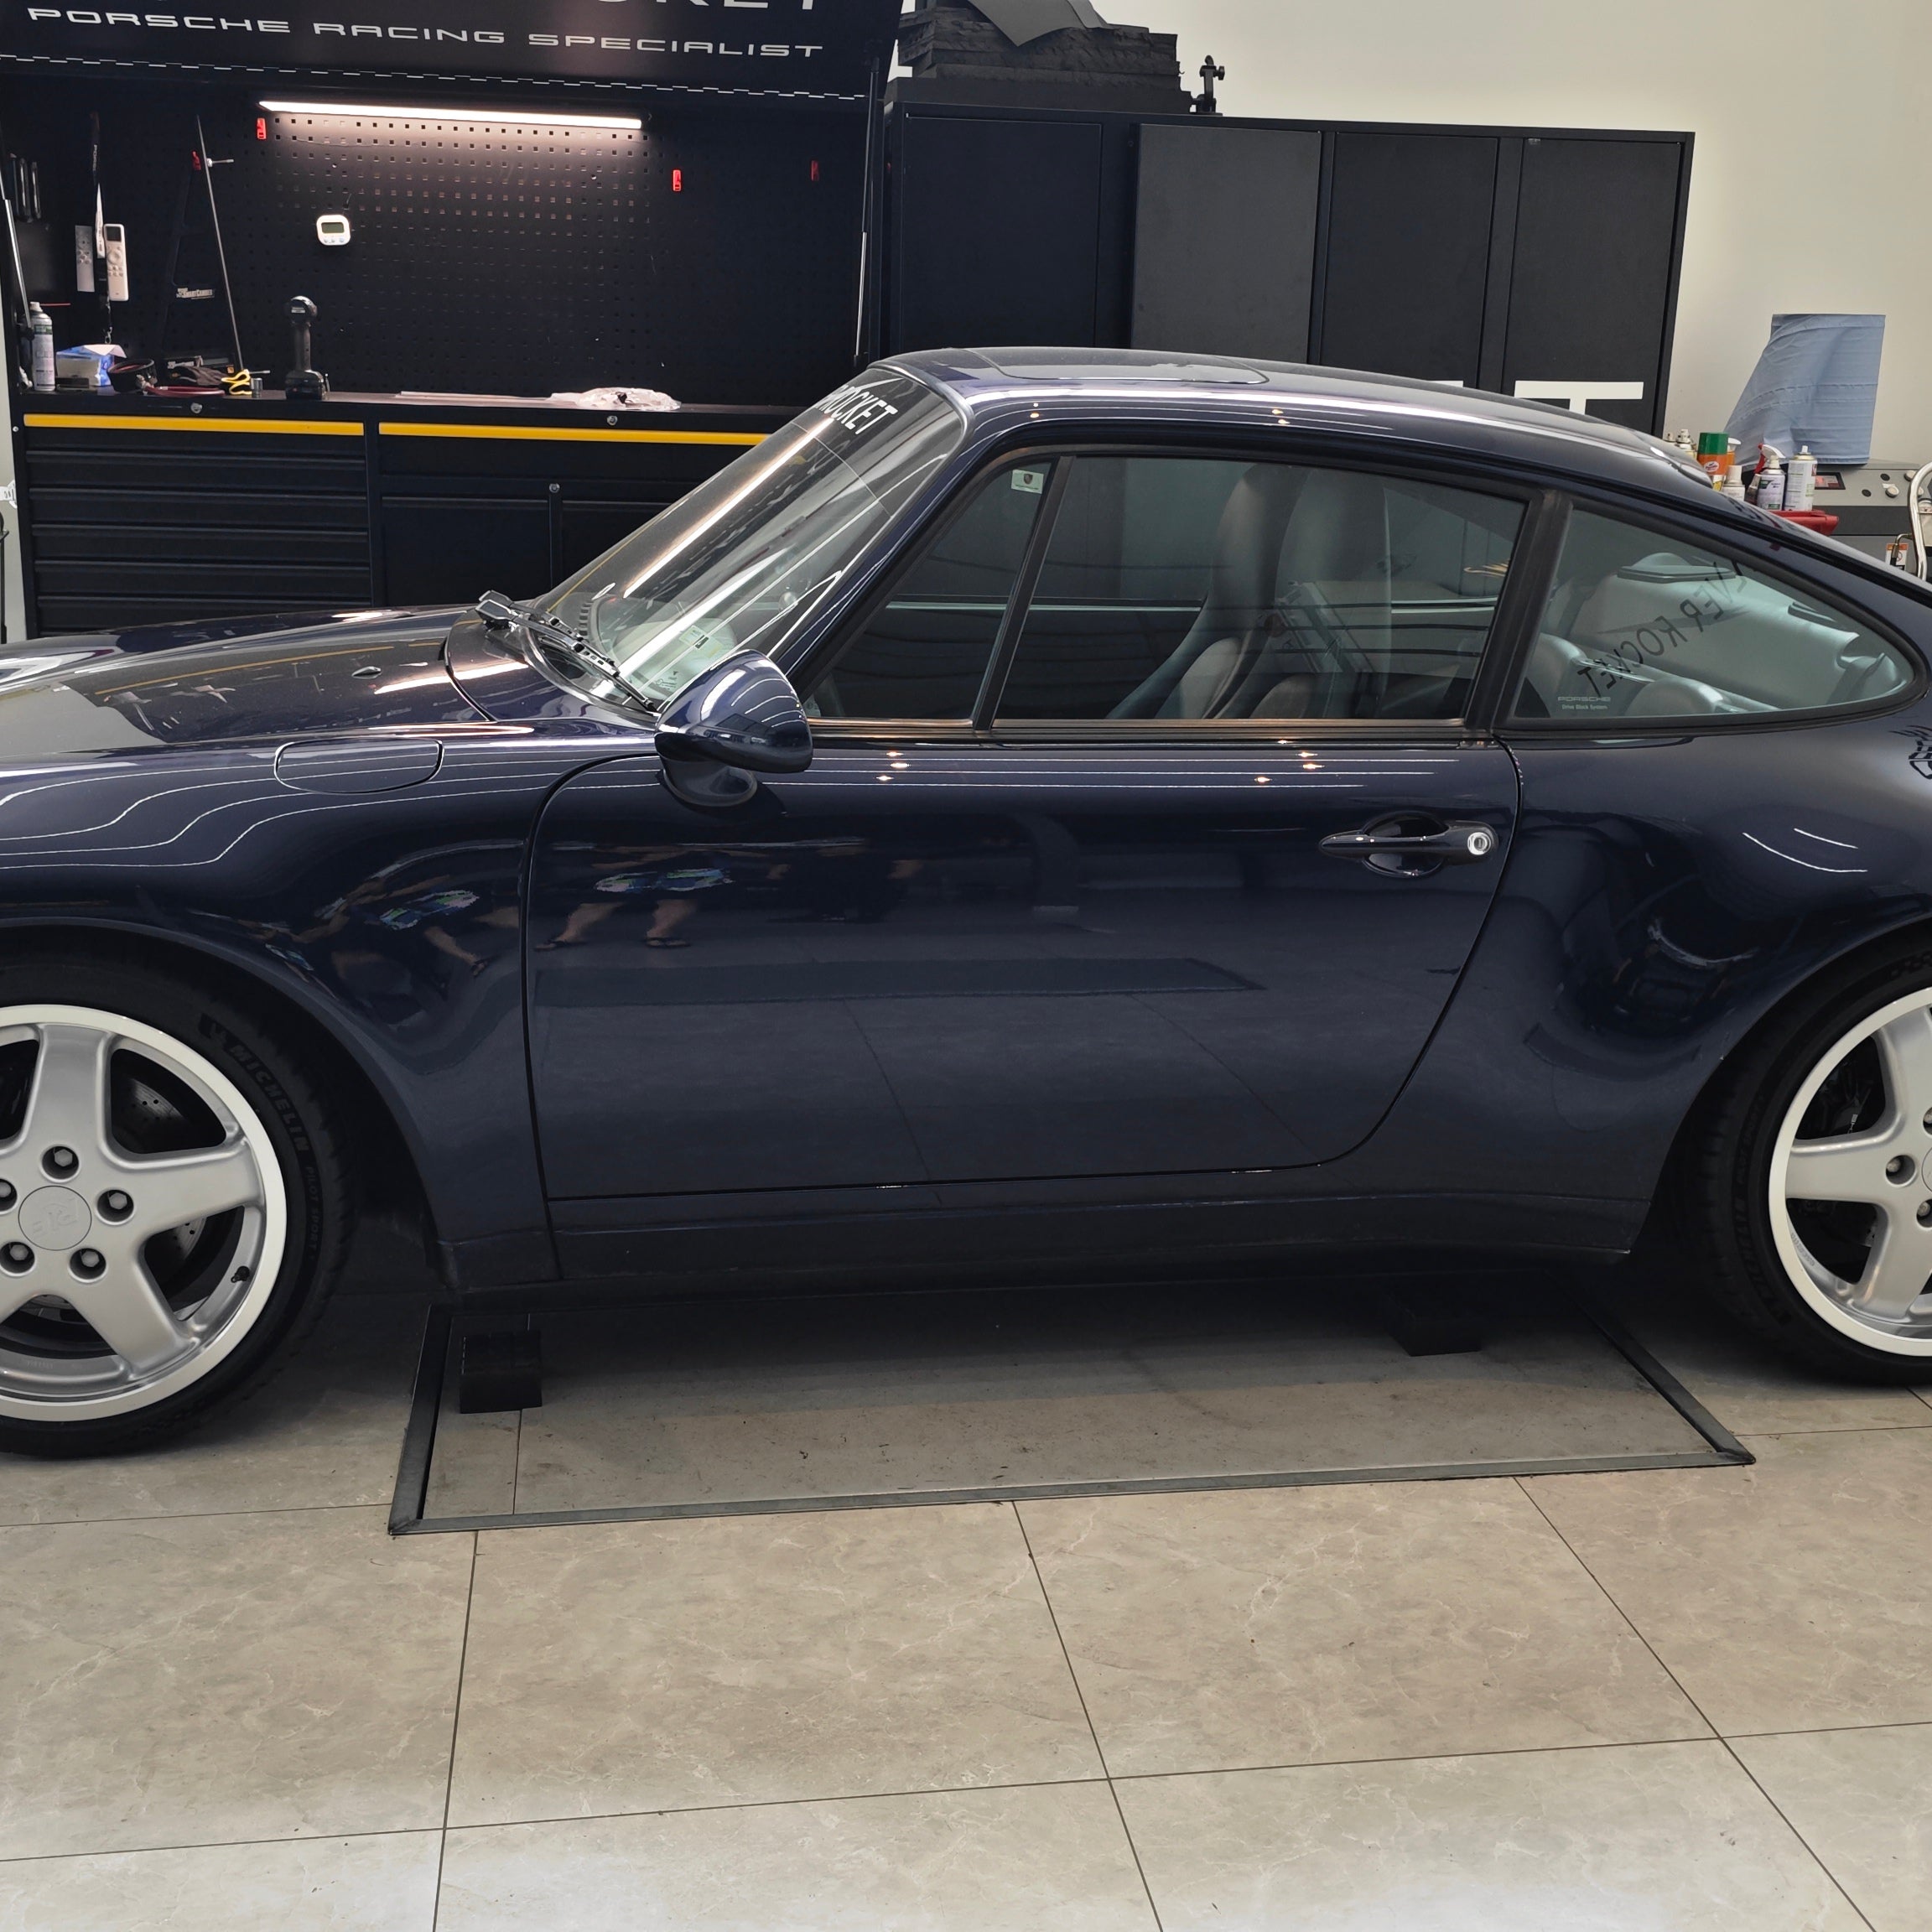 Restoring & Upgrading the Classic Porsche 993